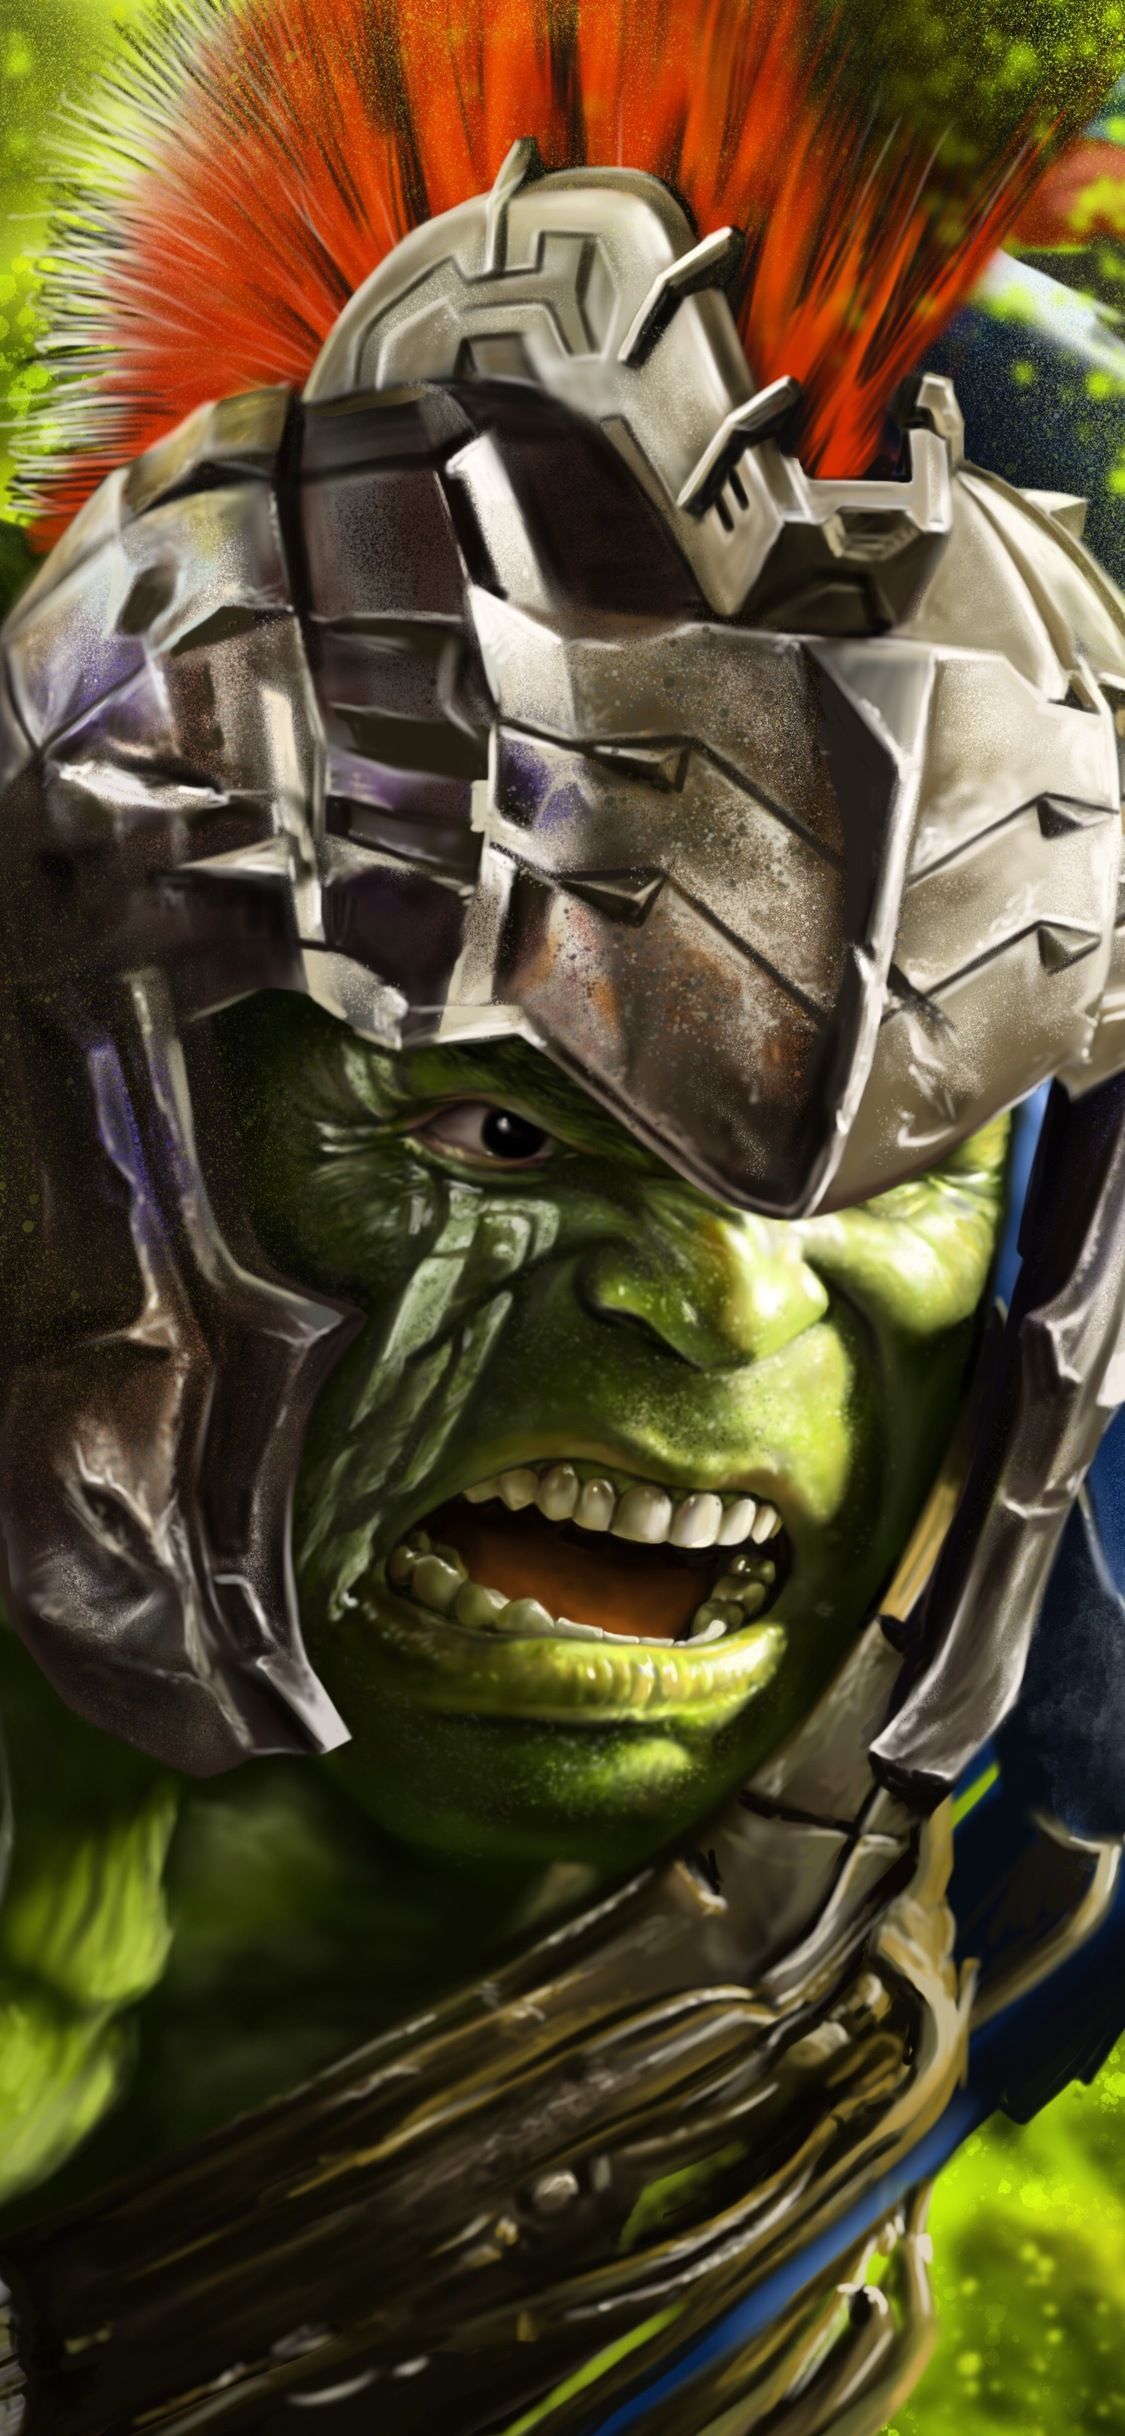 Hulk In Thor Ragnarok 8k Artwork iPhone XS, iPhone iPhone X HD 4k Wallpaper, Image, Background, Photo and Picture. Superhero wallpaper, Thor, Hulk